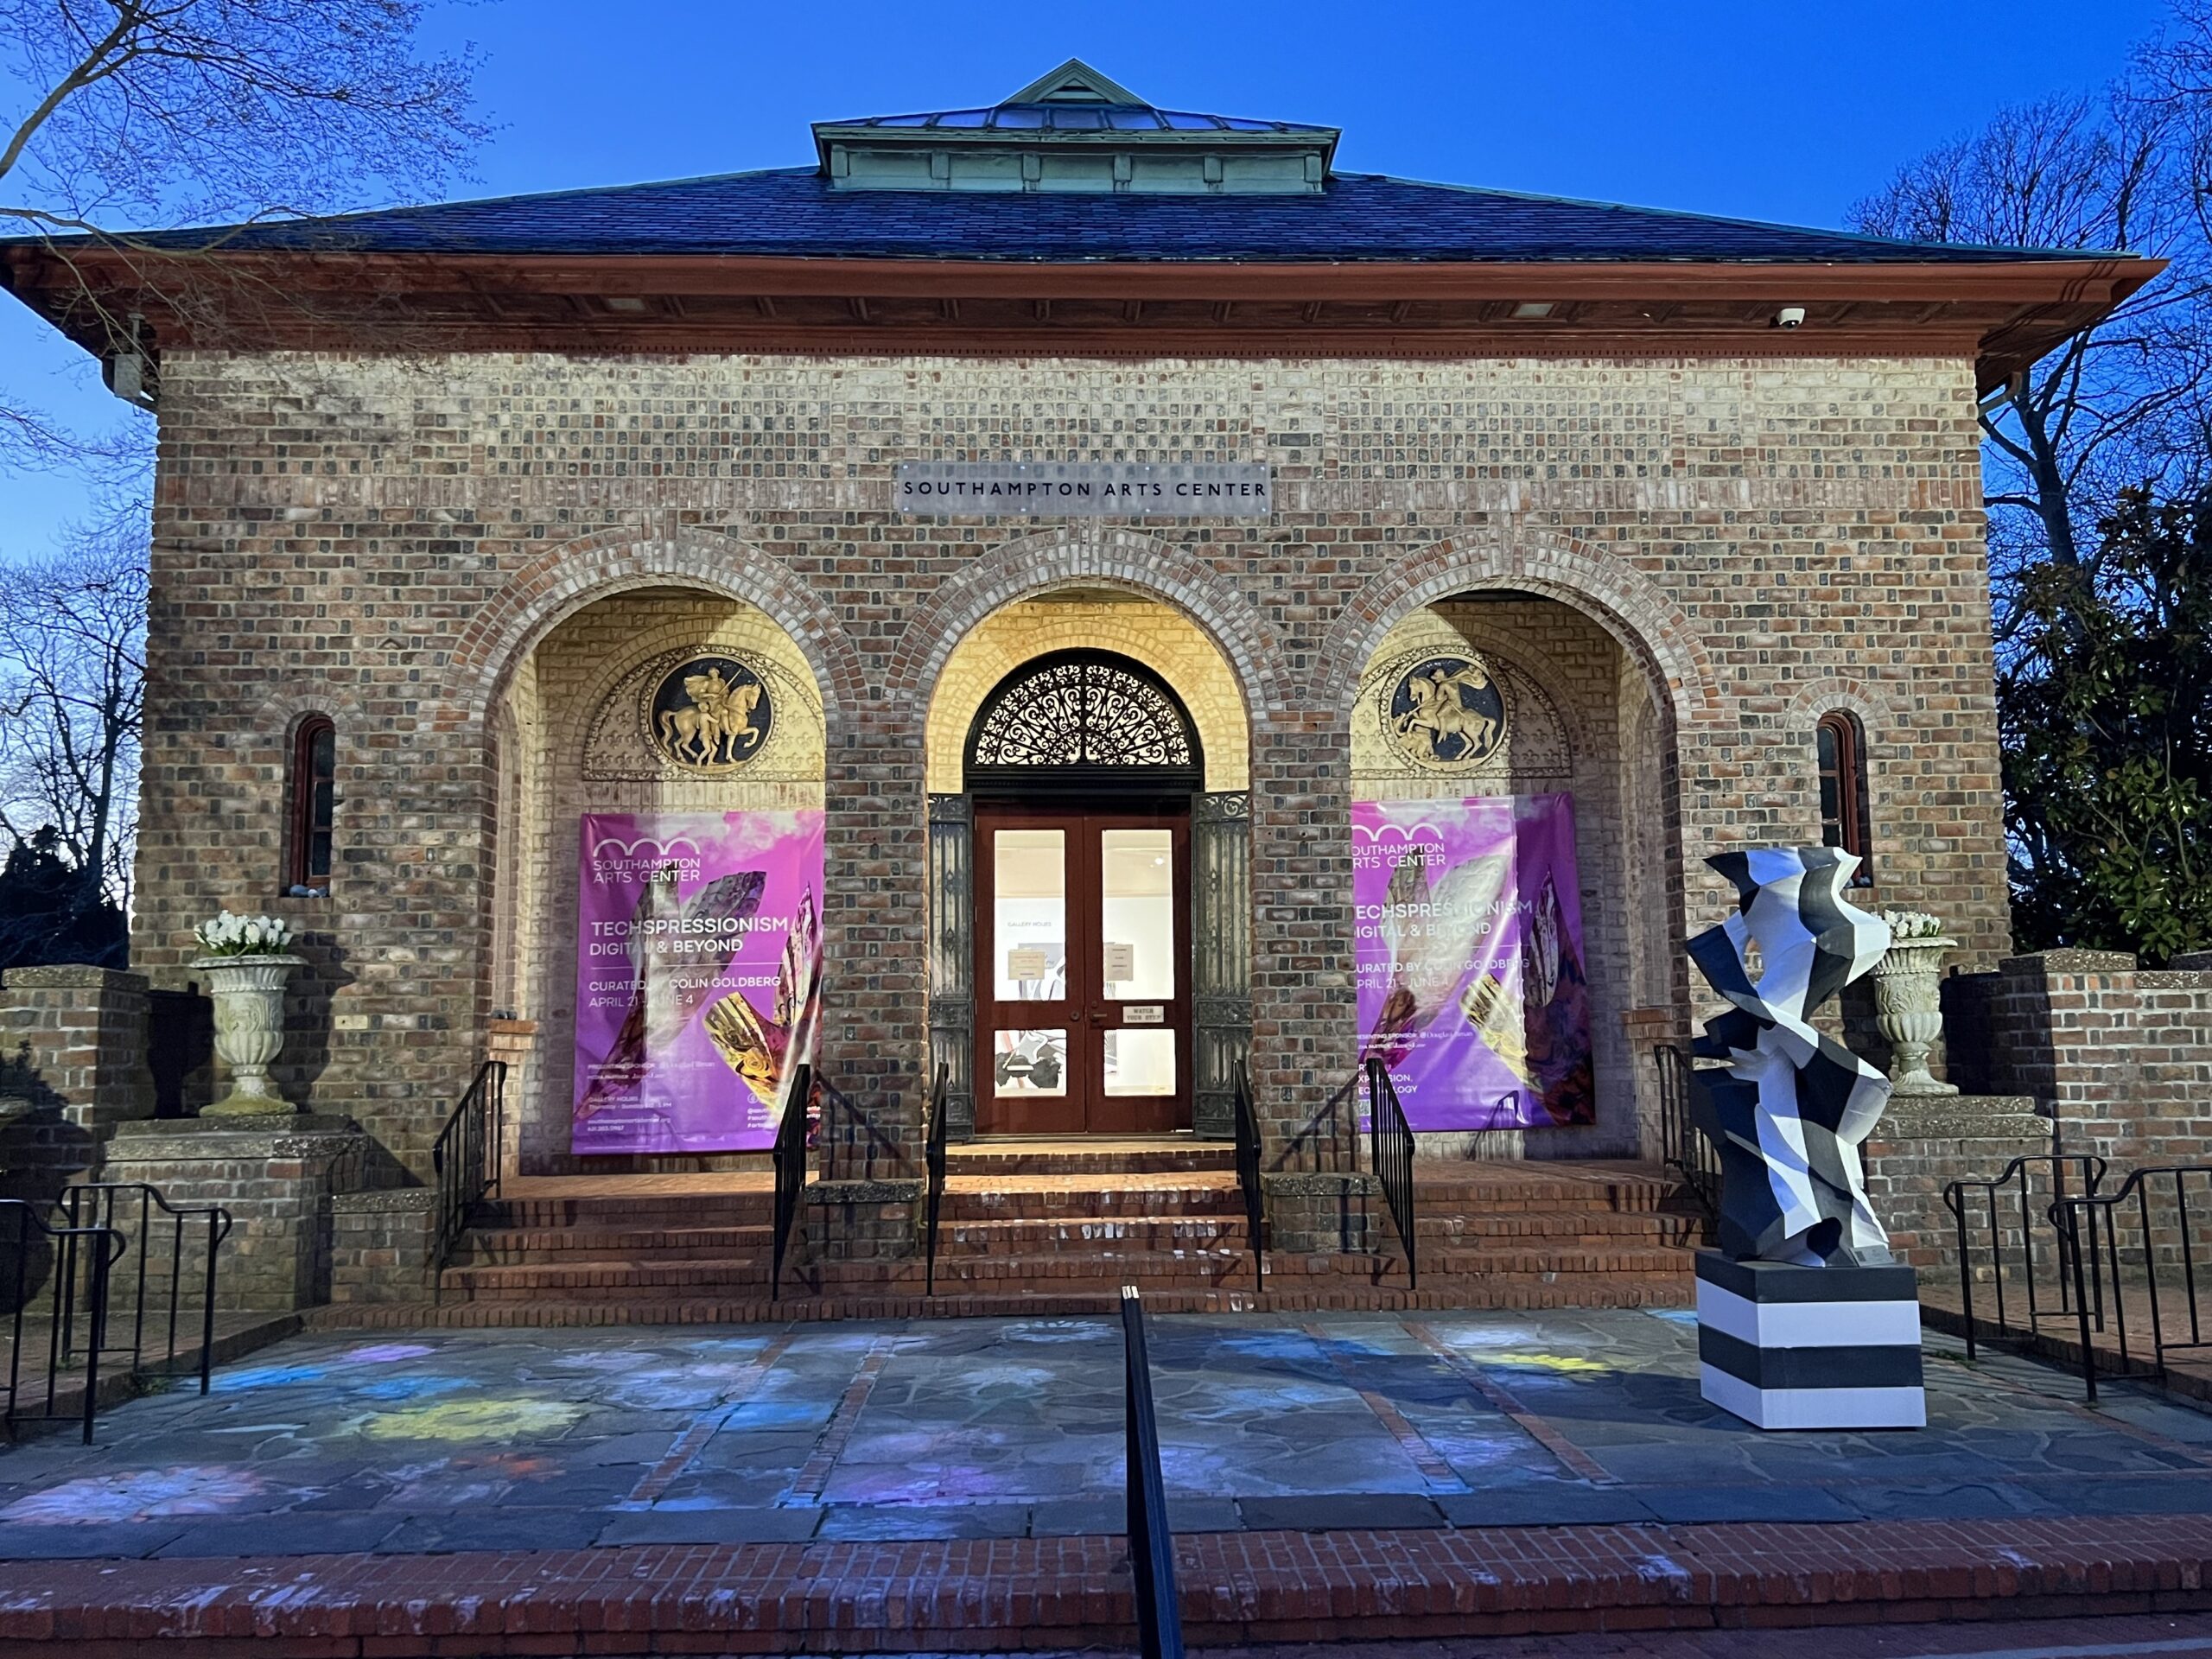 Southampton Arts Center opened 